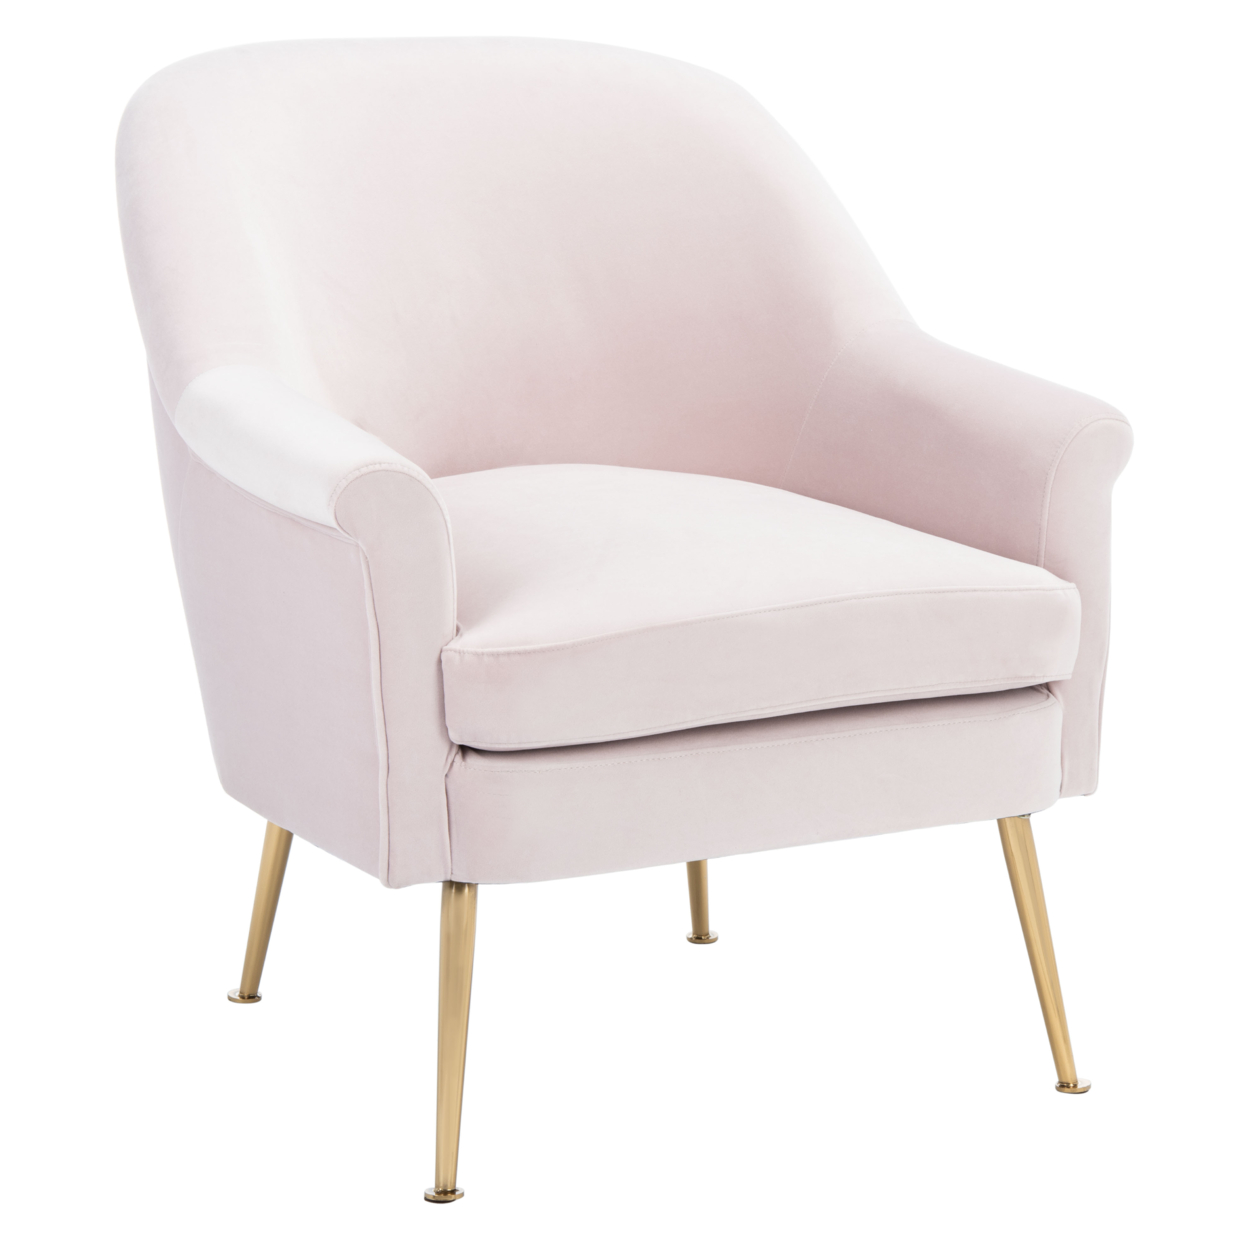 SAFAVIEH Rodrik Accent Chair Light Pink